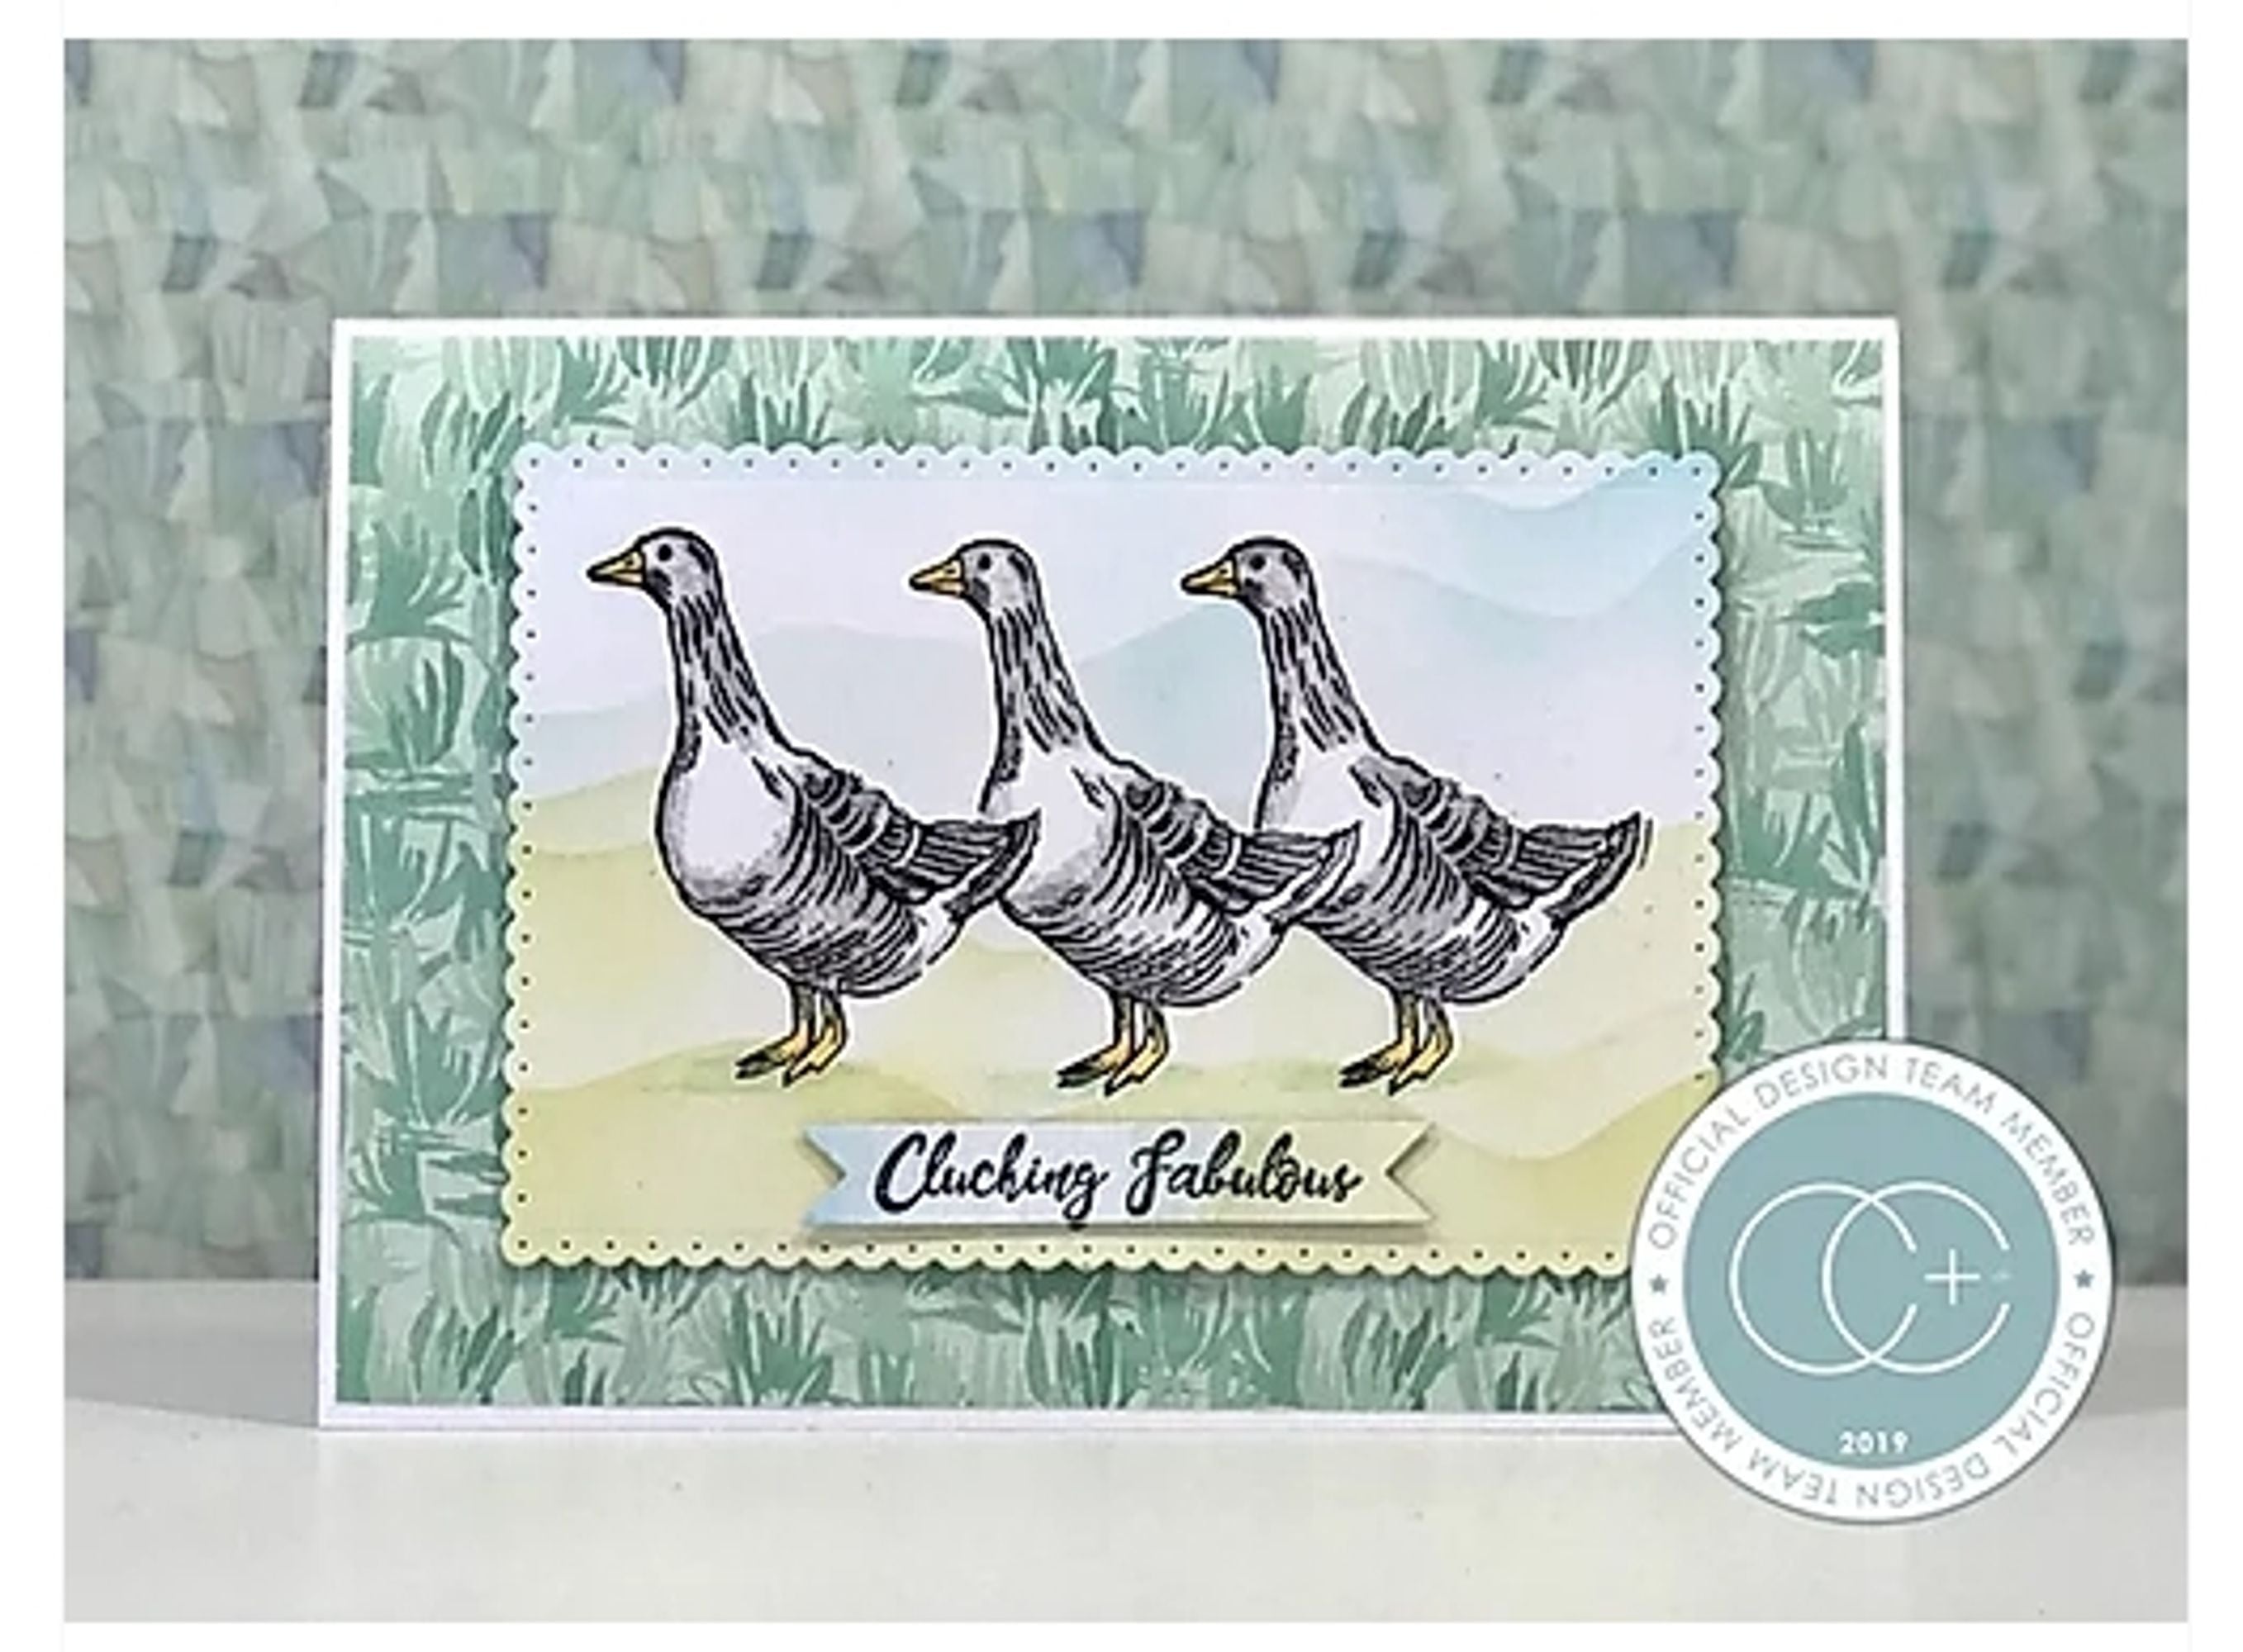 Farm Meadow - Stamp Set - Animals